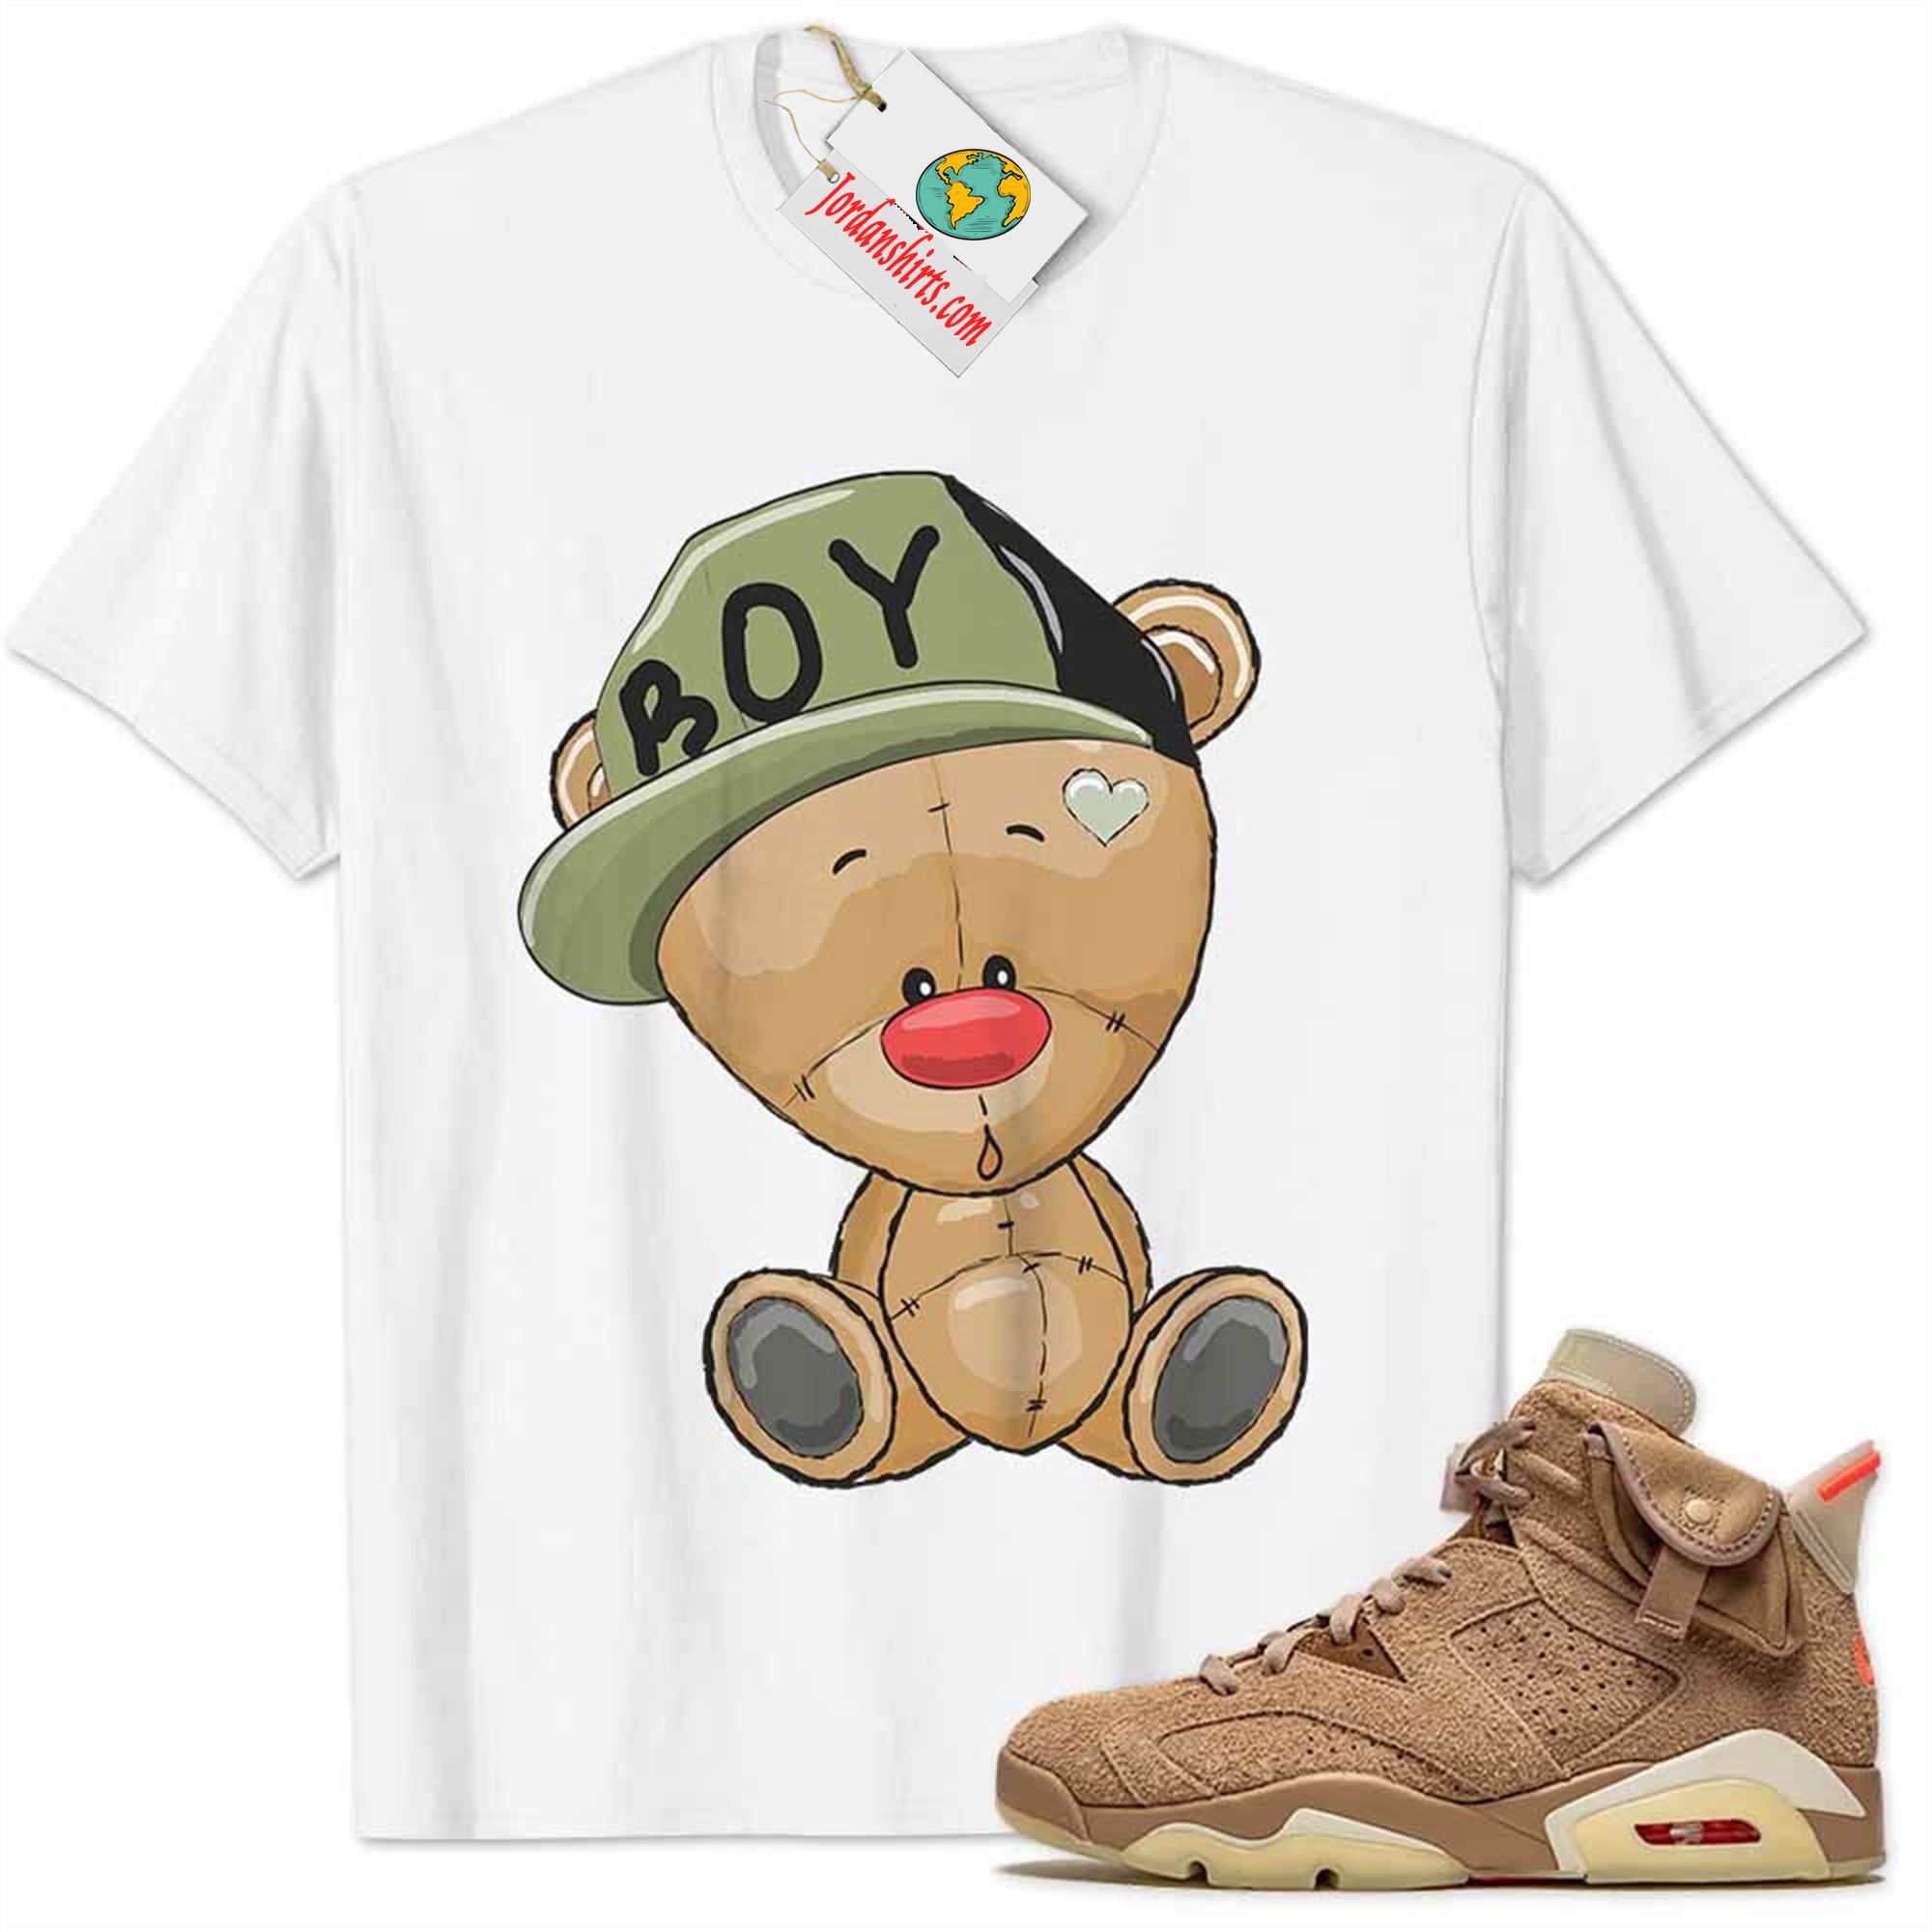 Jordan 6 Shirt, Jordan 6 Travis Scott Shirt Cute Baby Teddy Bear White Plus Size Up To 5xl